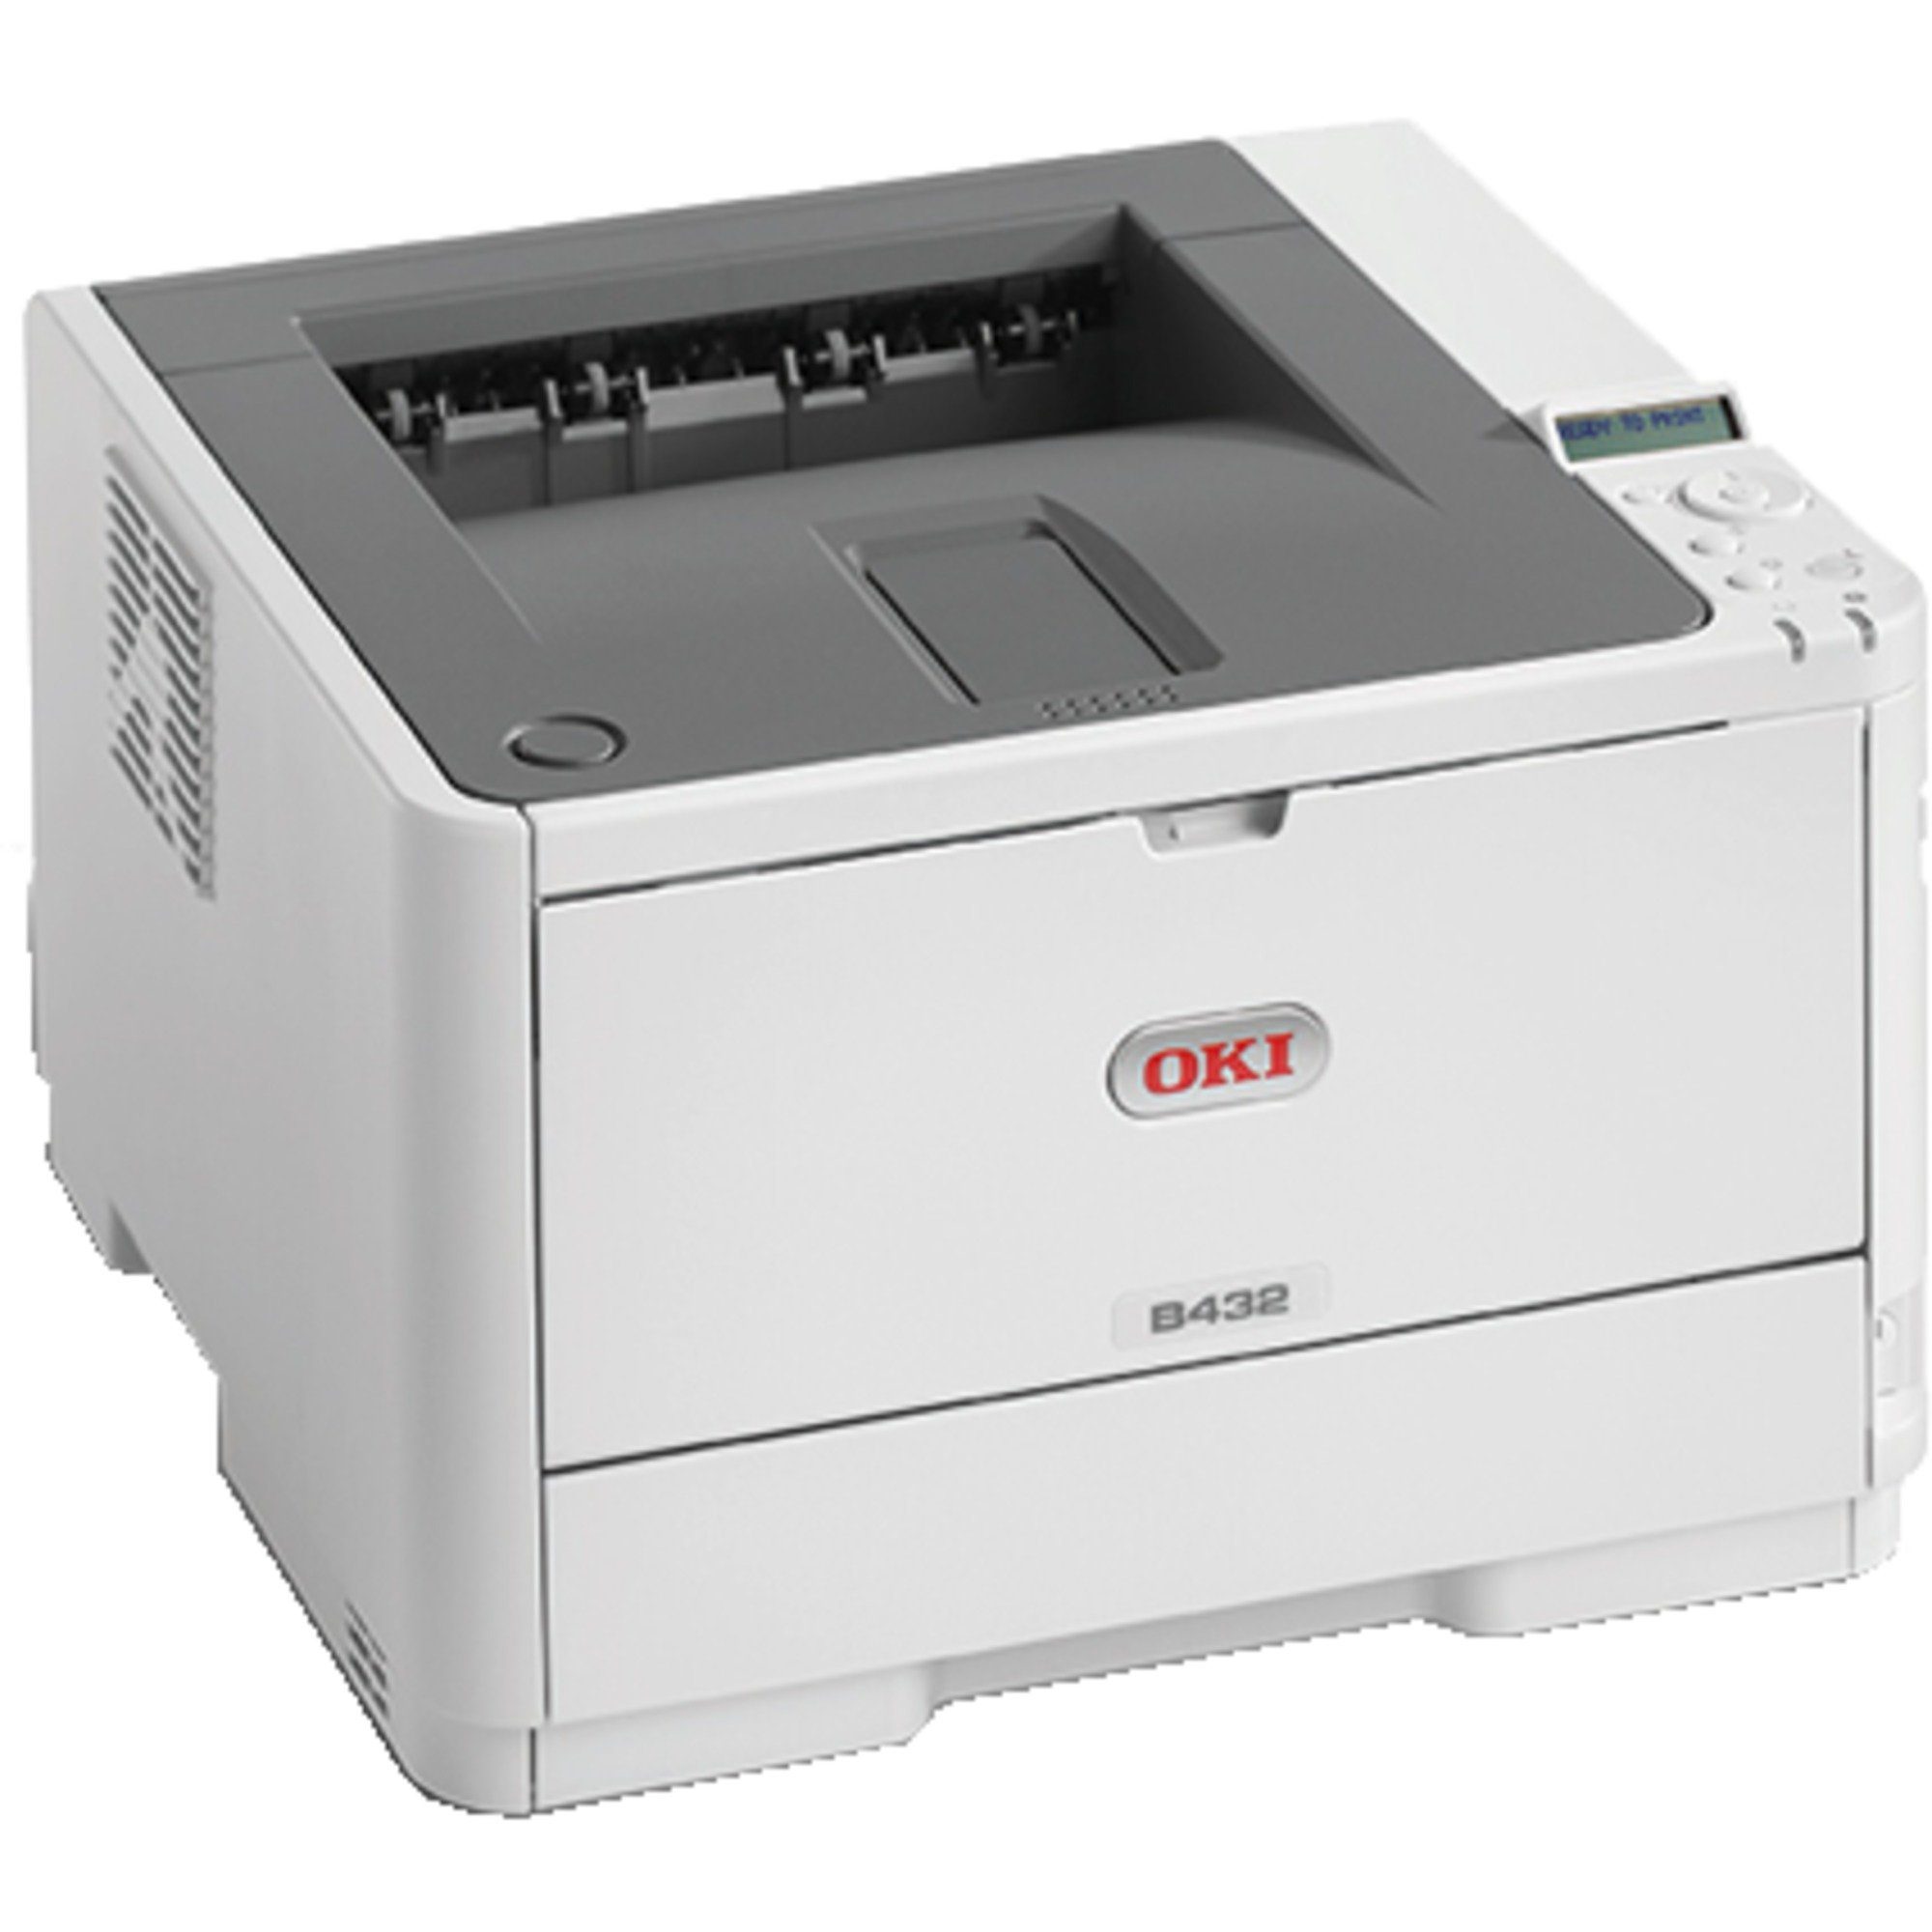 OKI B432dn Multifunktionsdrucker